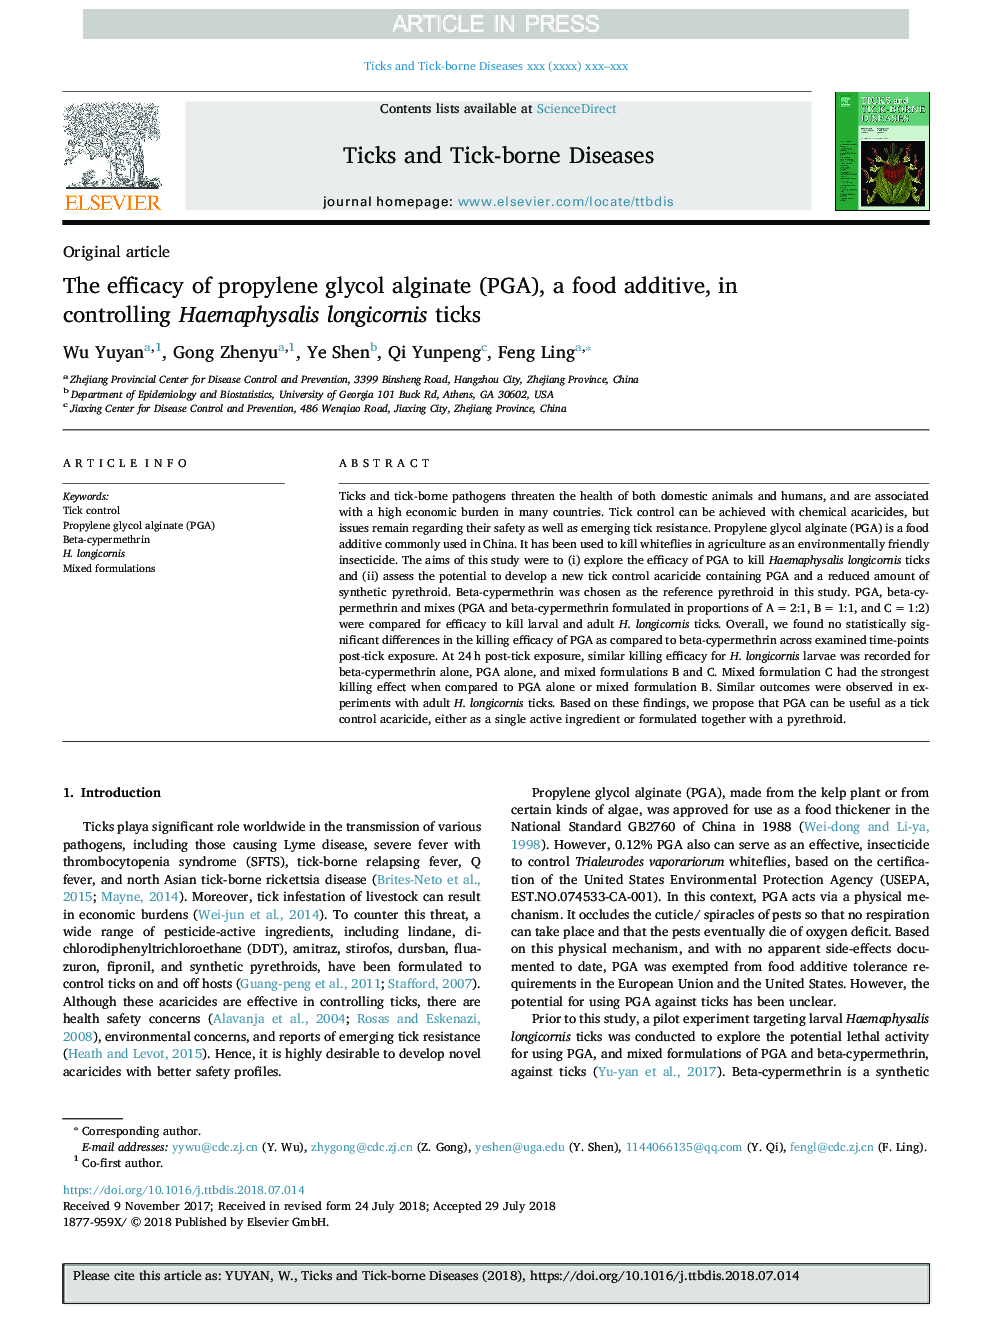 The efficacy of propylene glycol alginate (PGA), a food additive, in controlling Haemaphysalis longicornis ticks